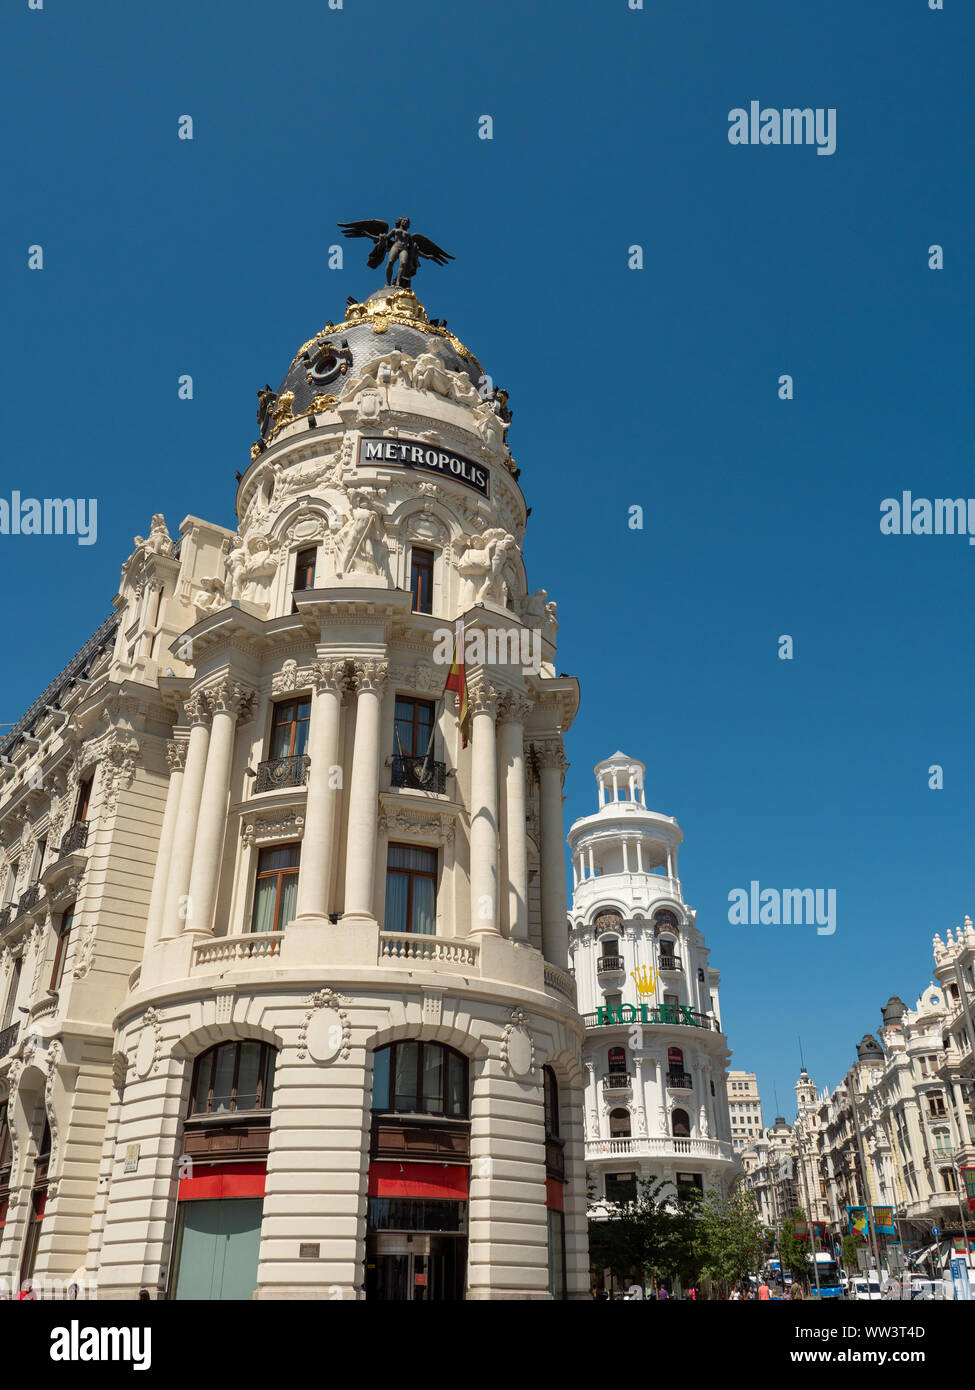 The Metropolis building, Madrid, Spain Stock Photo